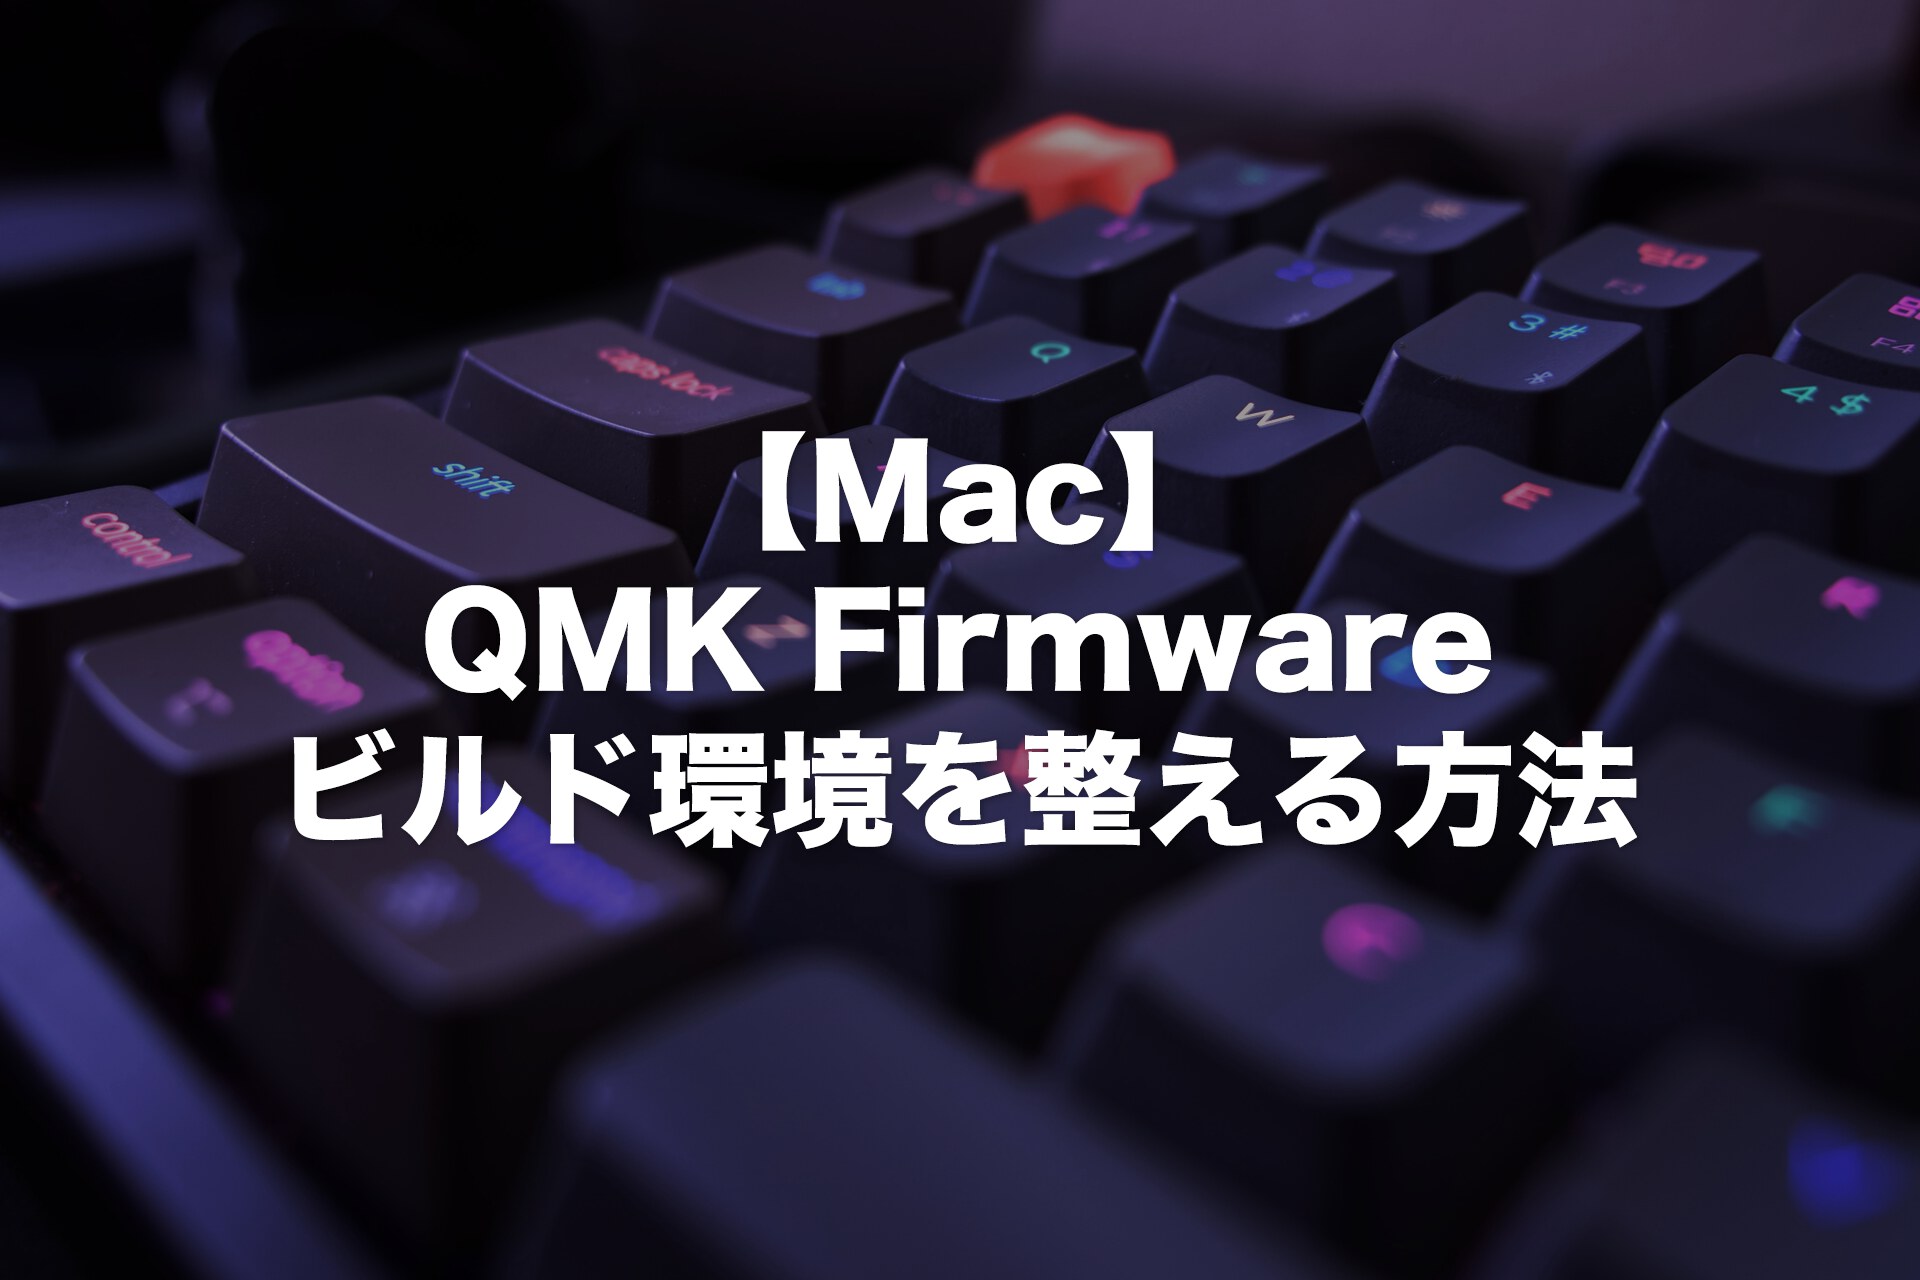 Macで自作キーボードの開発環境を整える方法【QMK Firmware】